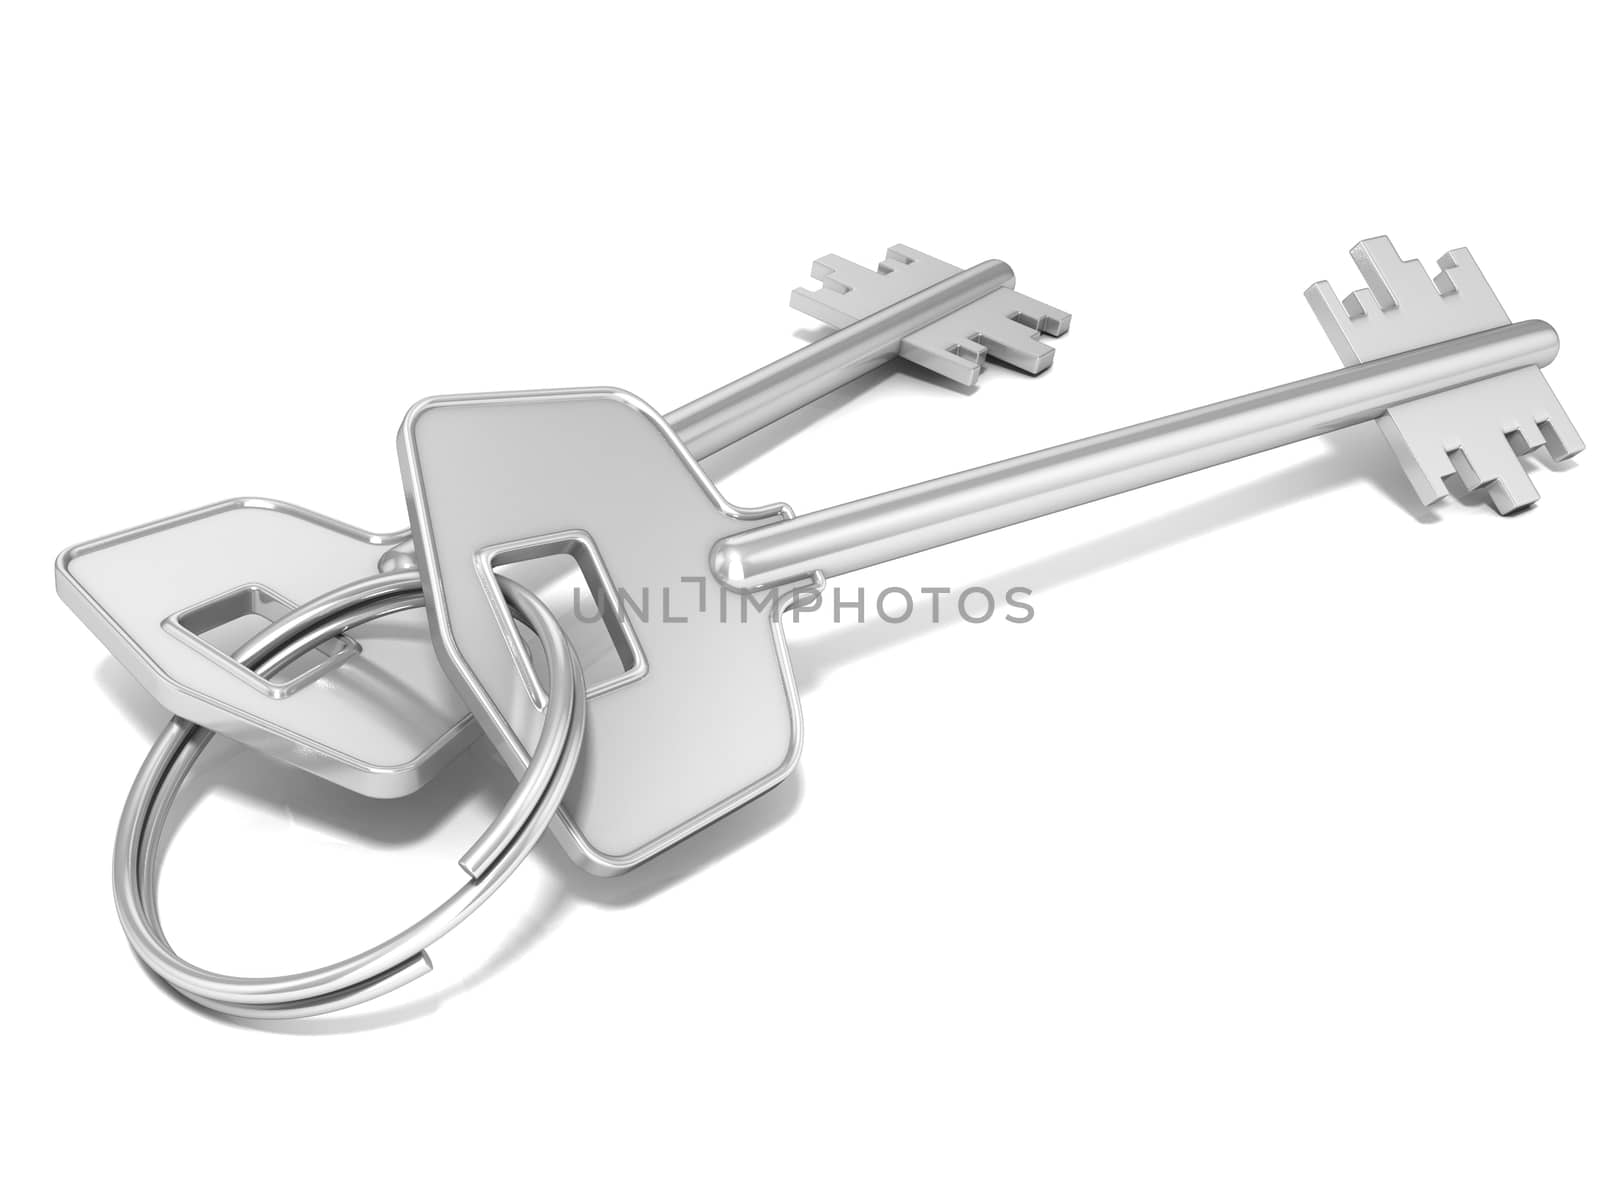 Door keys isolated on white background